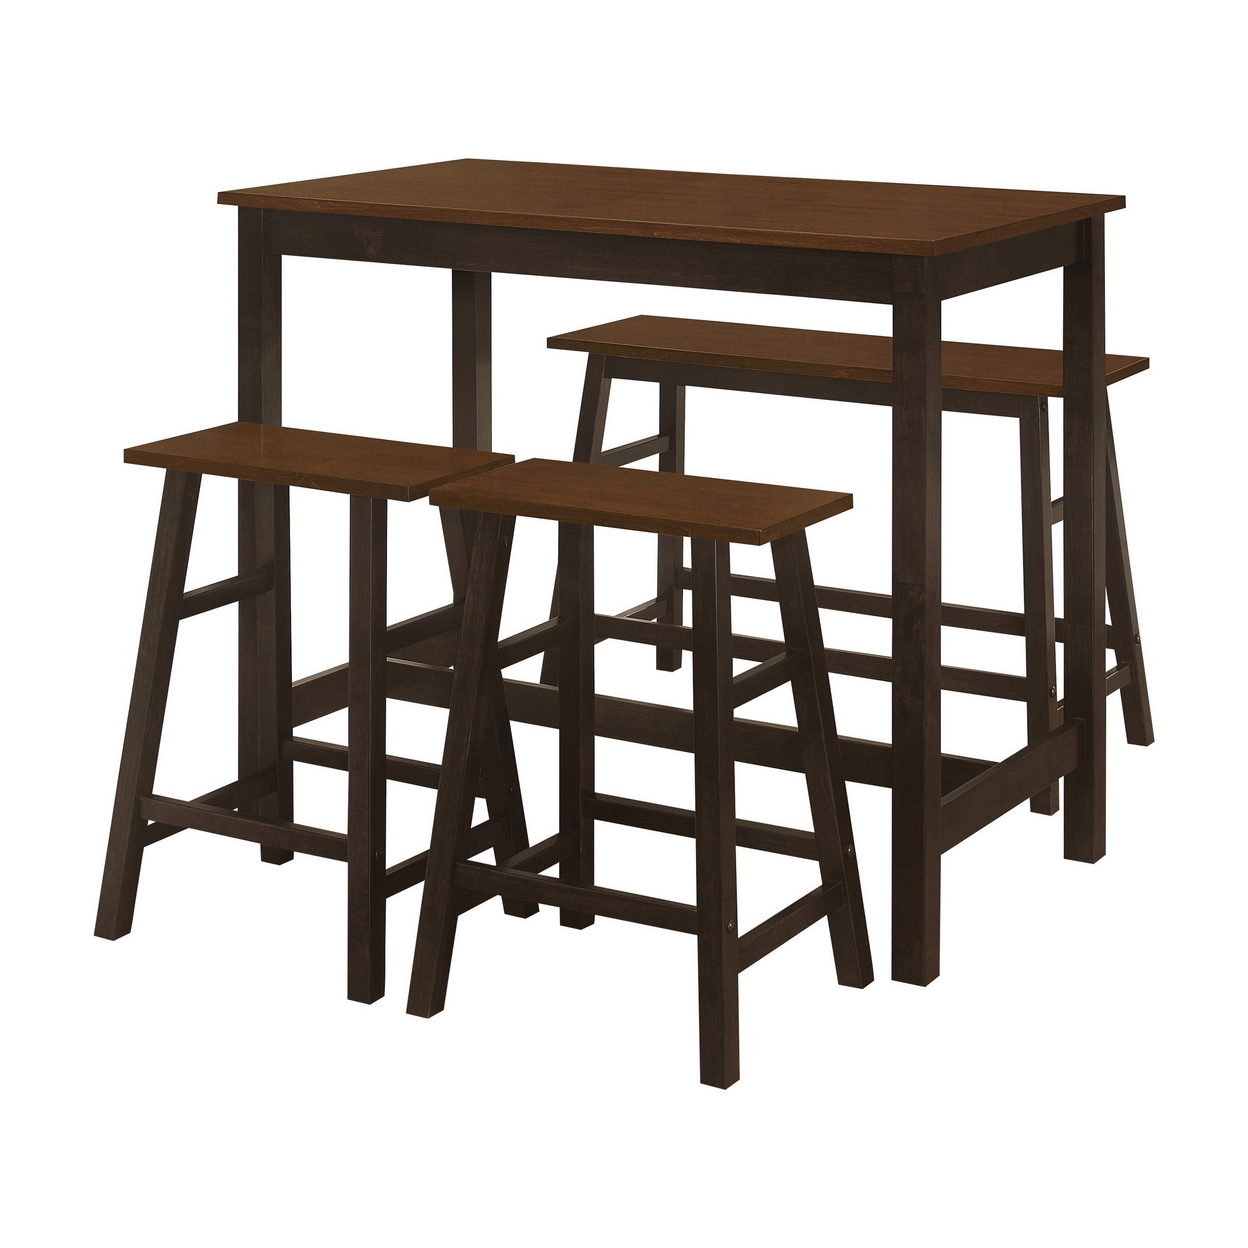 4 Piece Wood Counter Height Dining Set, Trestle Base, Stools, Dark Brown- Saltoro Sherpi